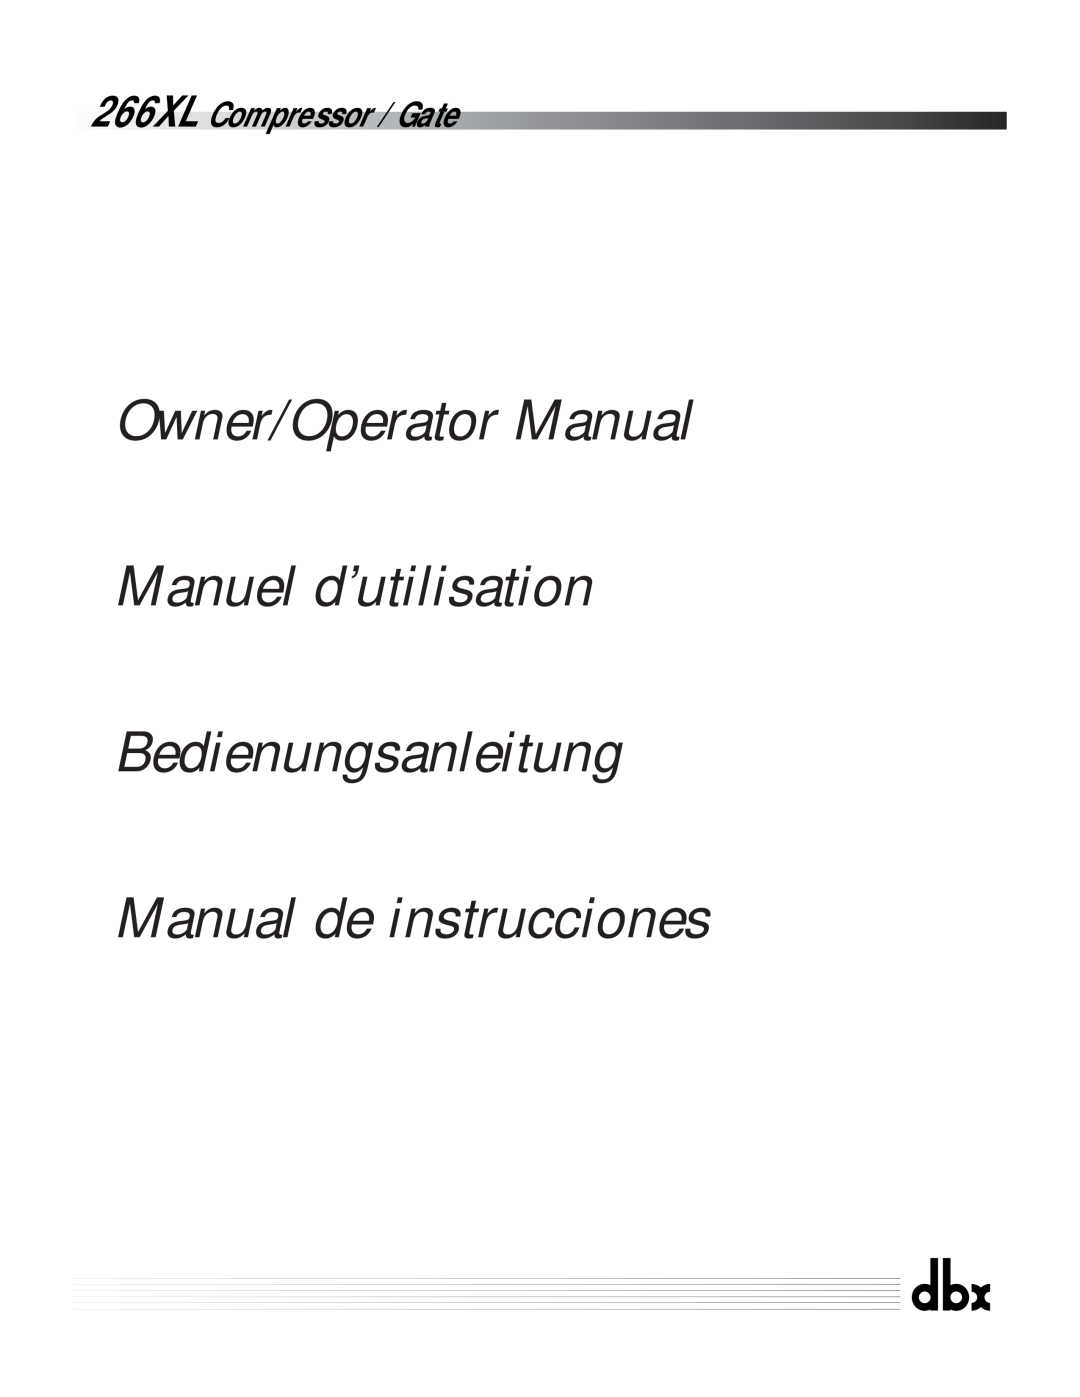 dbx Pro manuel dutilisation 266XL Compressor / Gate, Owner/Operator Manual Manuel d’utilisation Bedienungsanleitung 